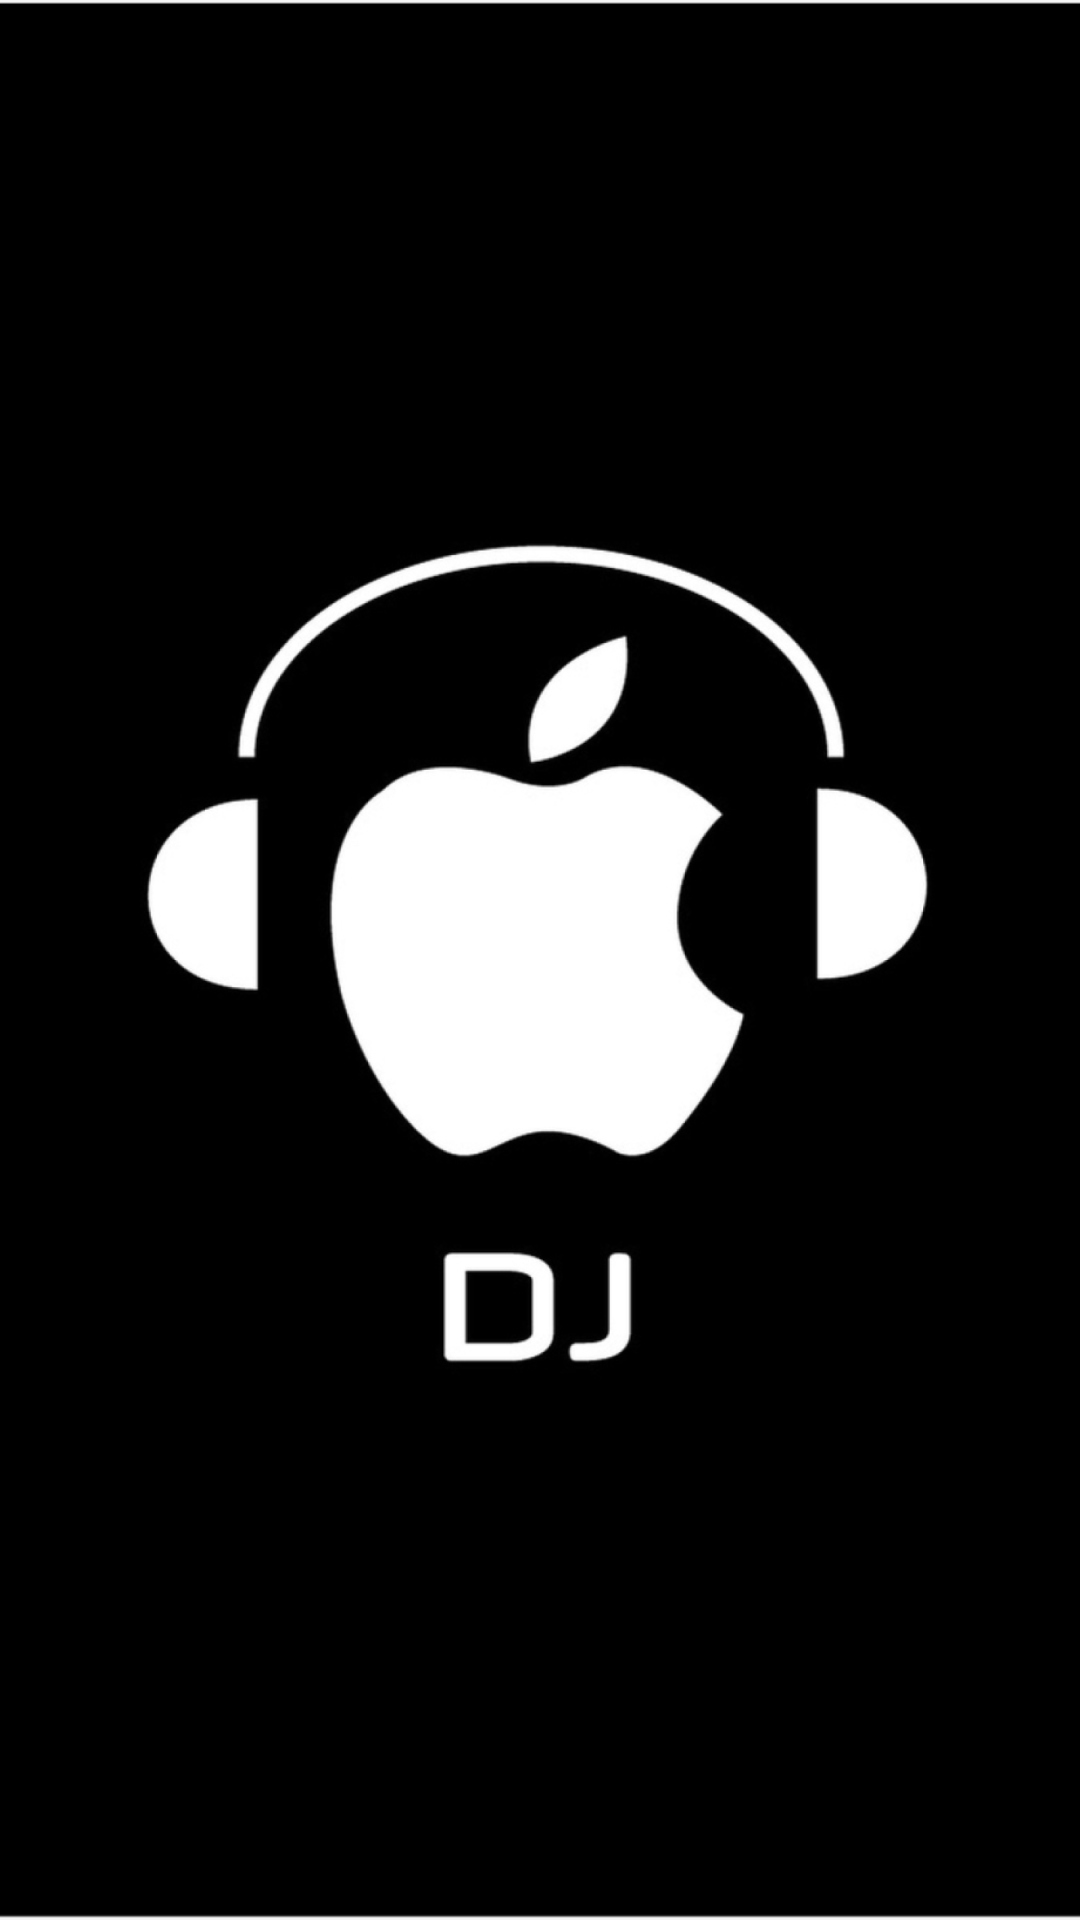 Das Apple DJ Wallpaper 1080x1920